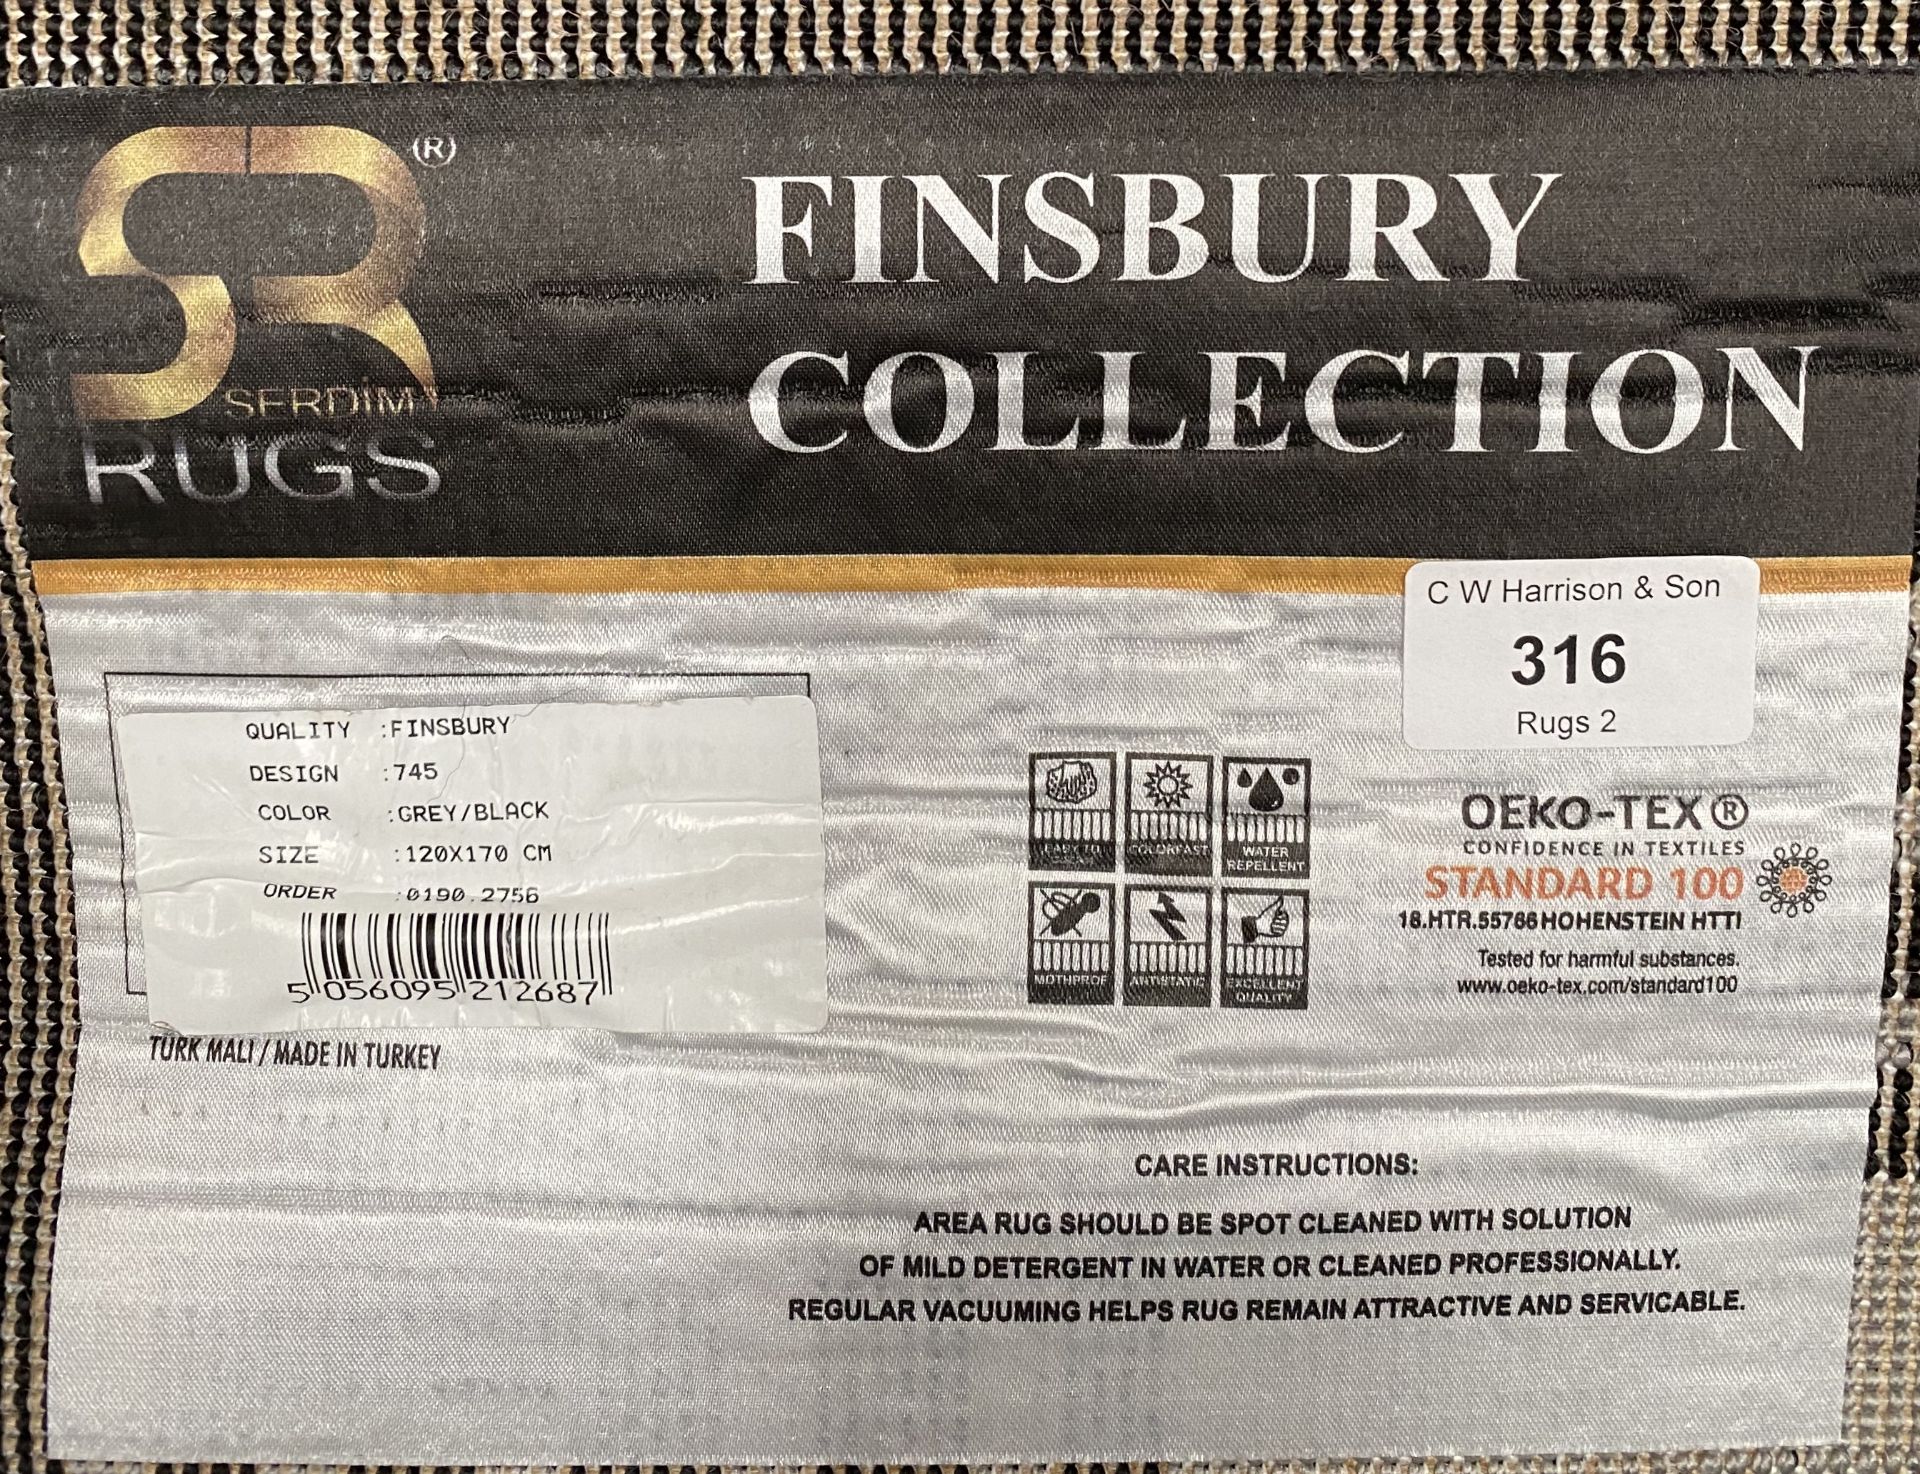 A Finbury Collection 745 grey/black rug - 120cm x 170cm - Image 2 of 2